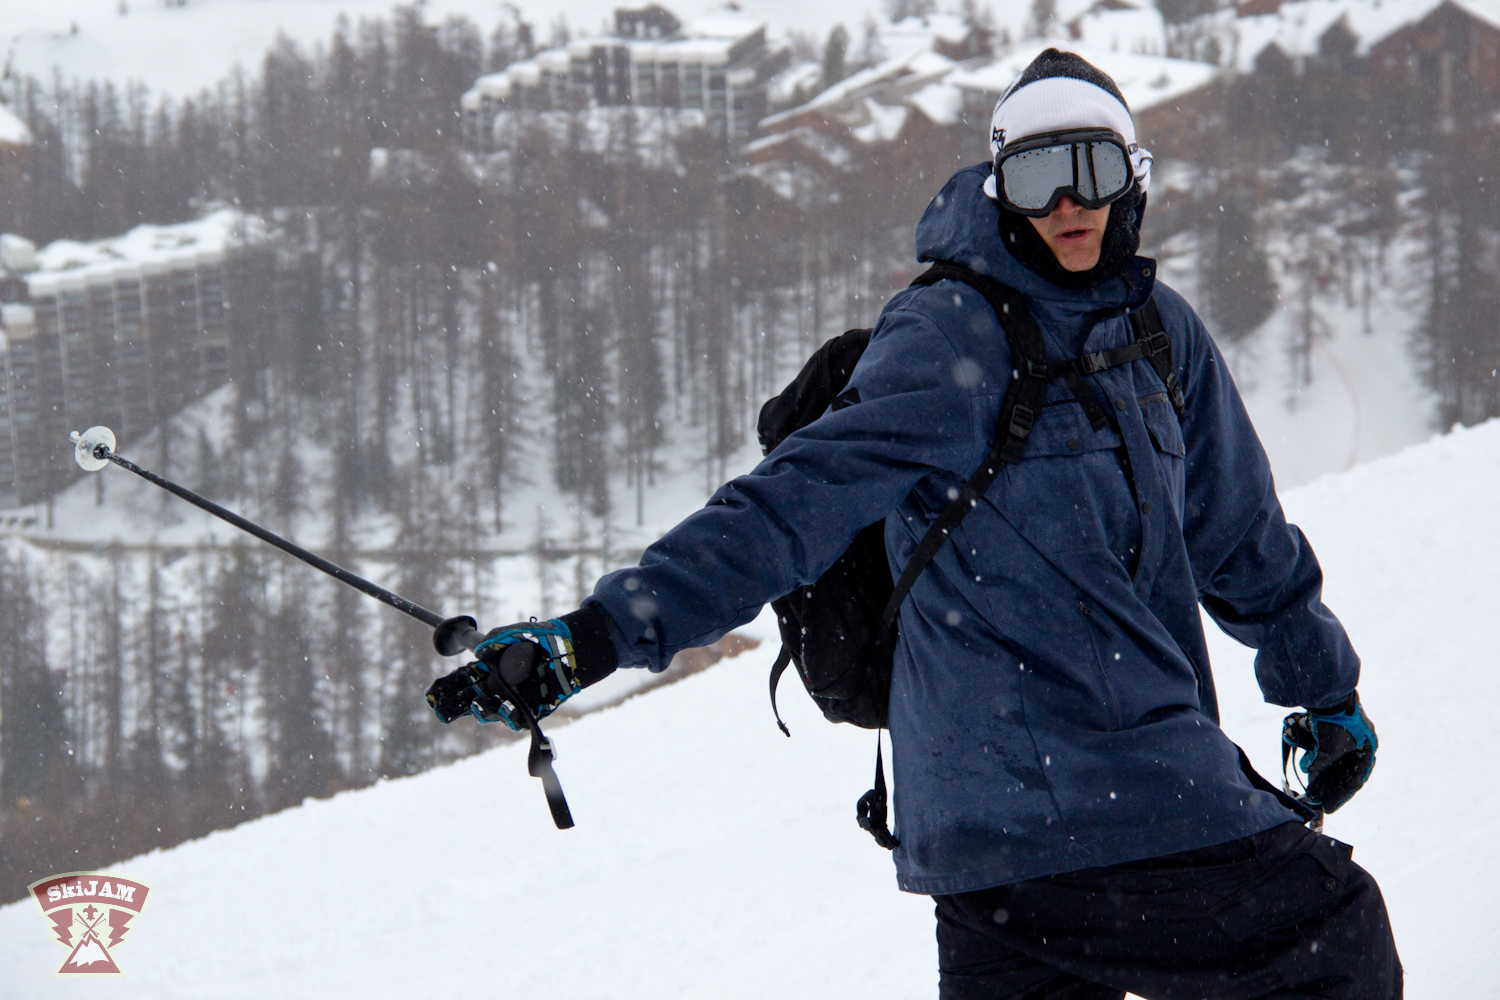 2013-skijam-havasi-mate-031.jpg